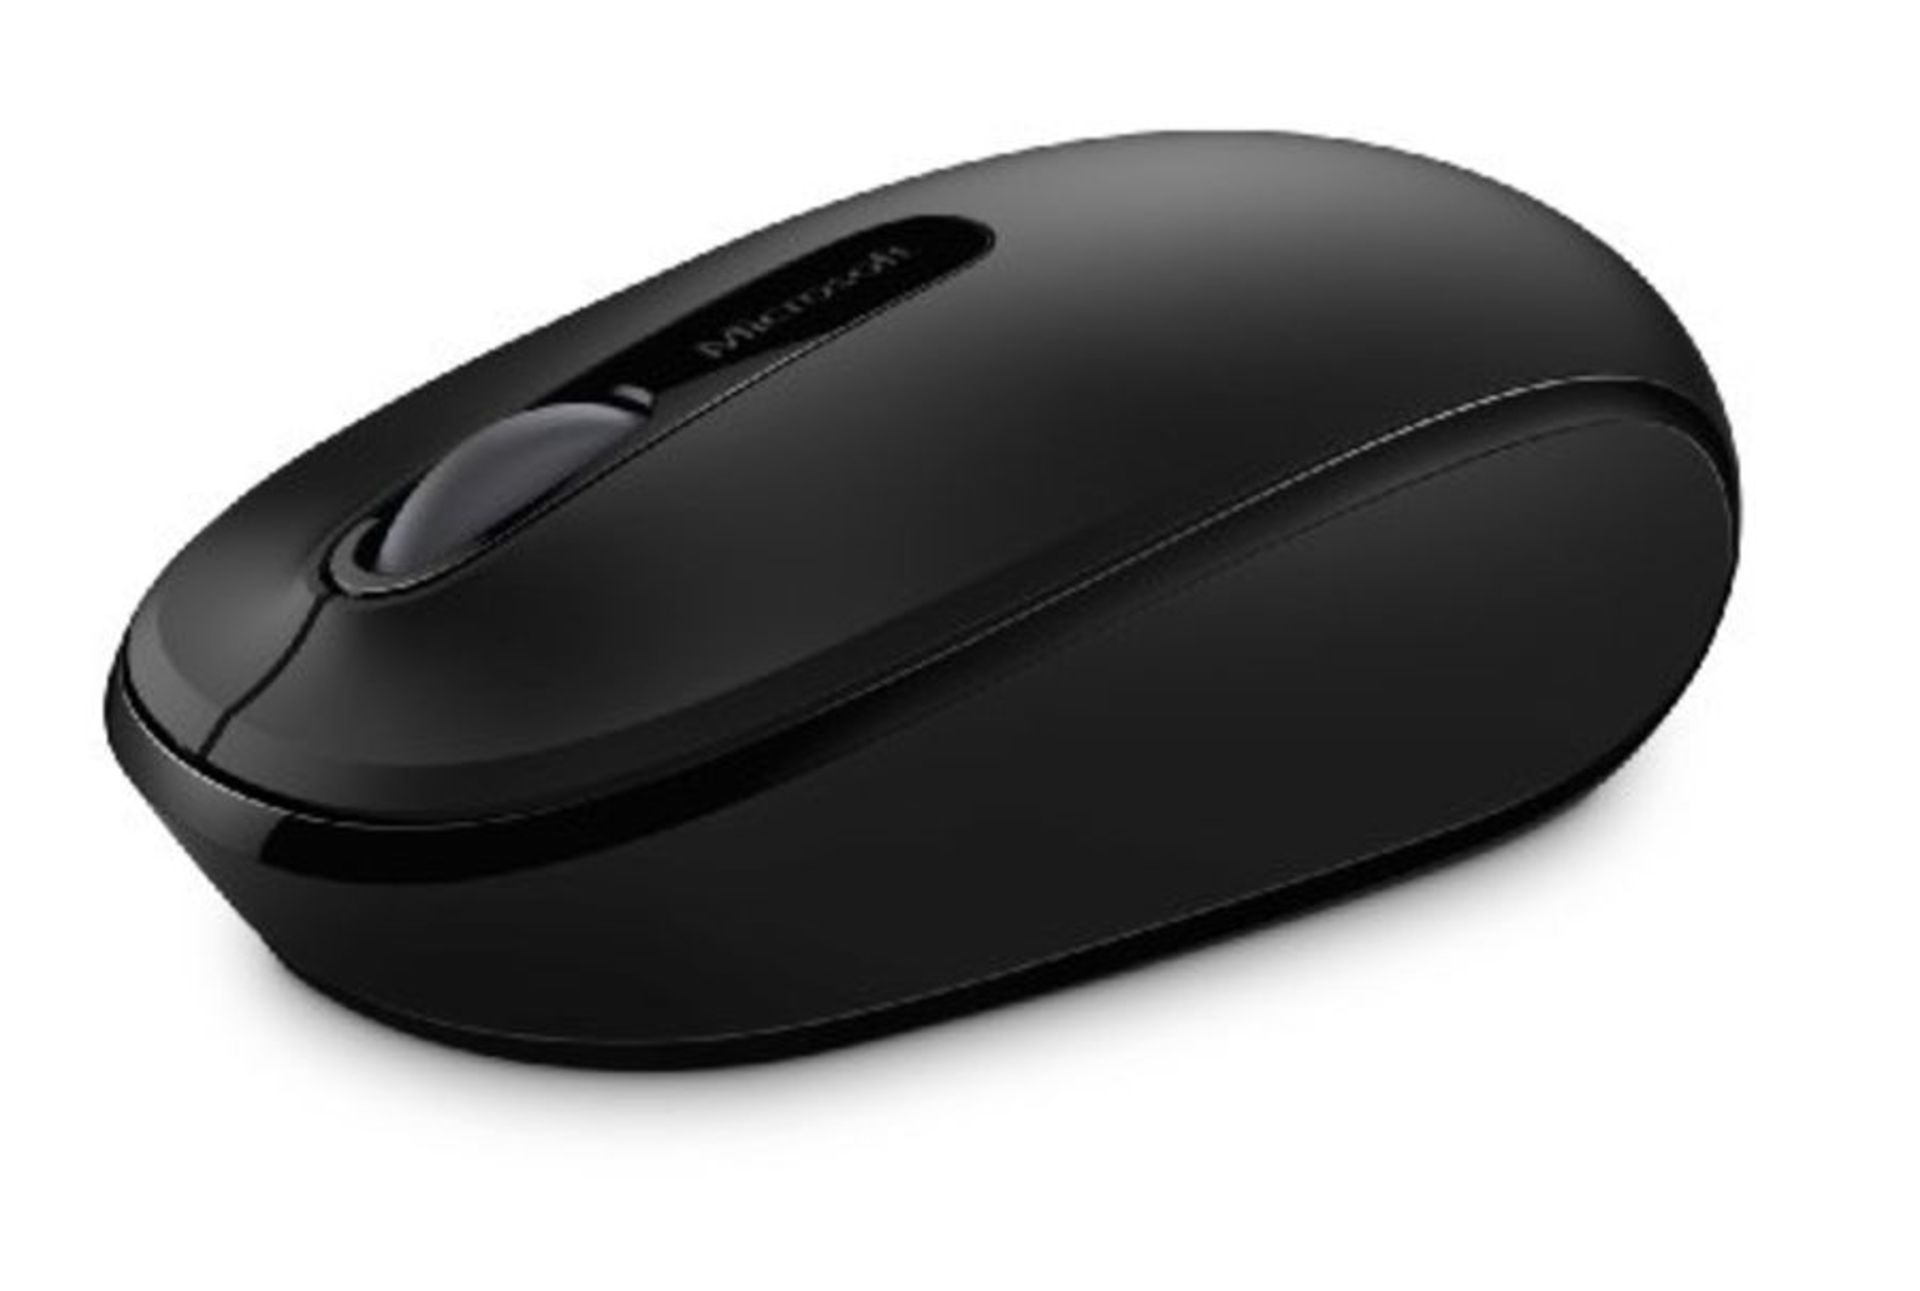 Microsoft 1850 3 Button Wireless Mobile Mouse - Black